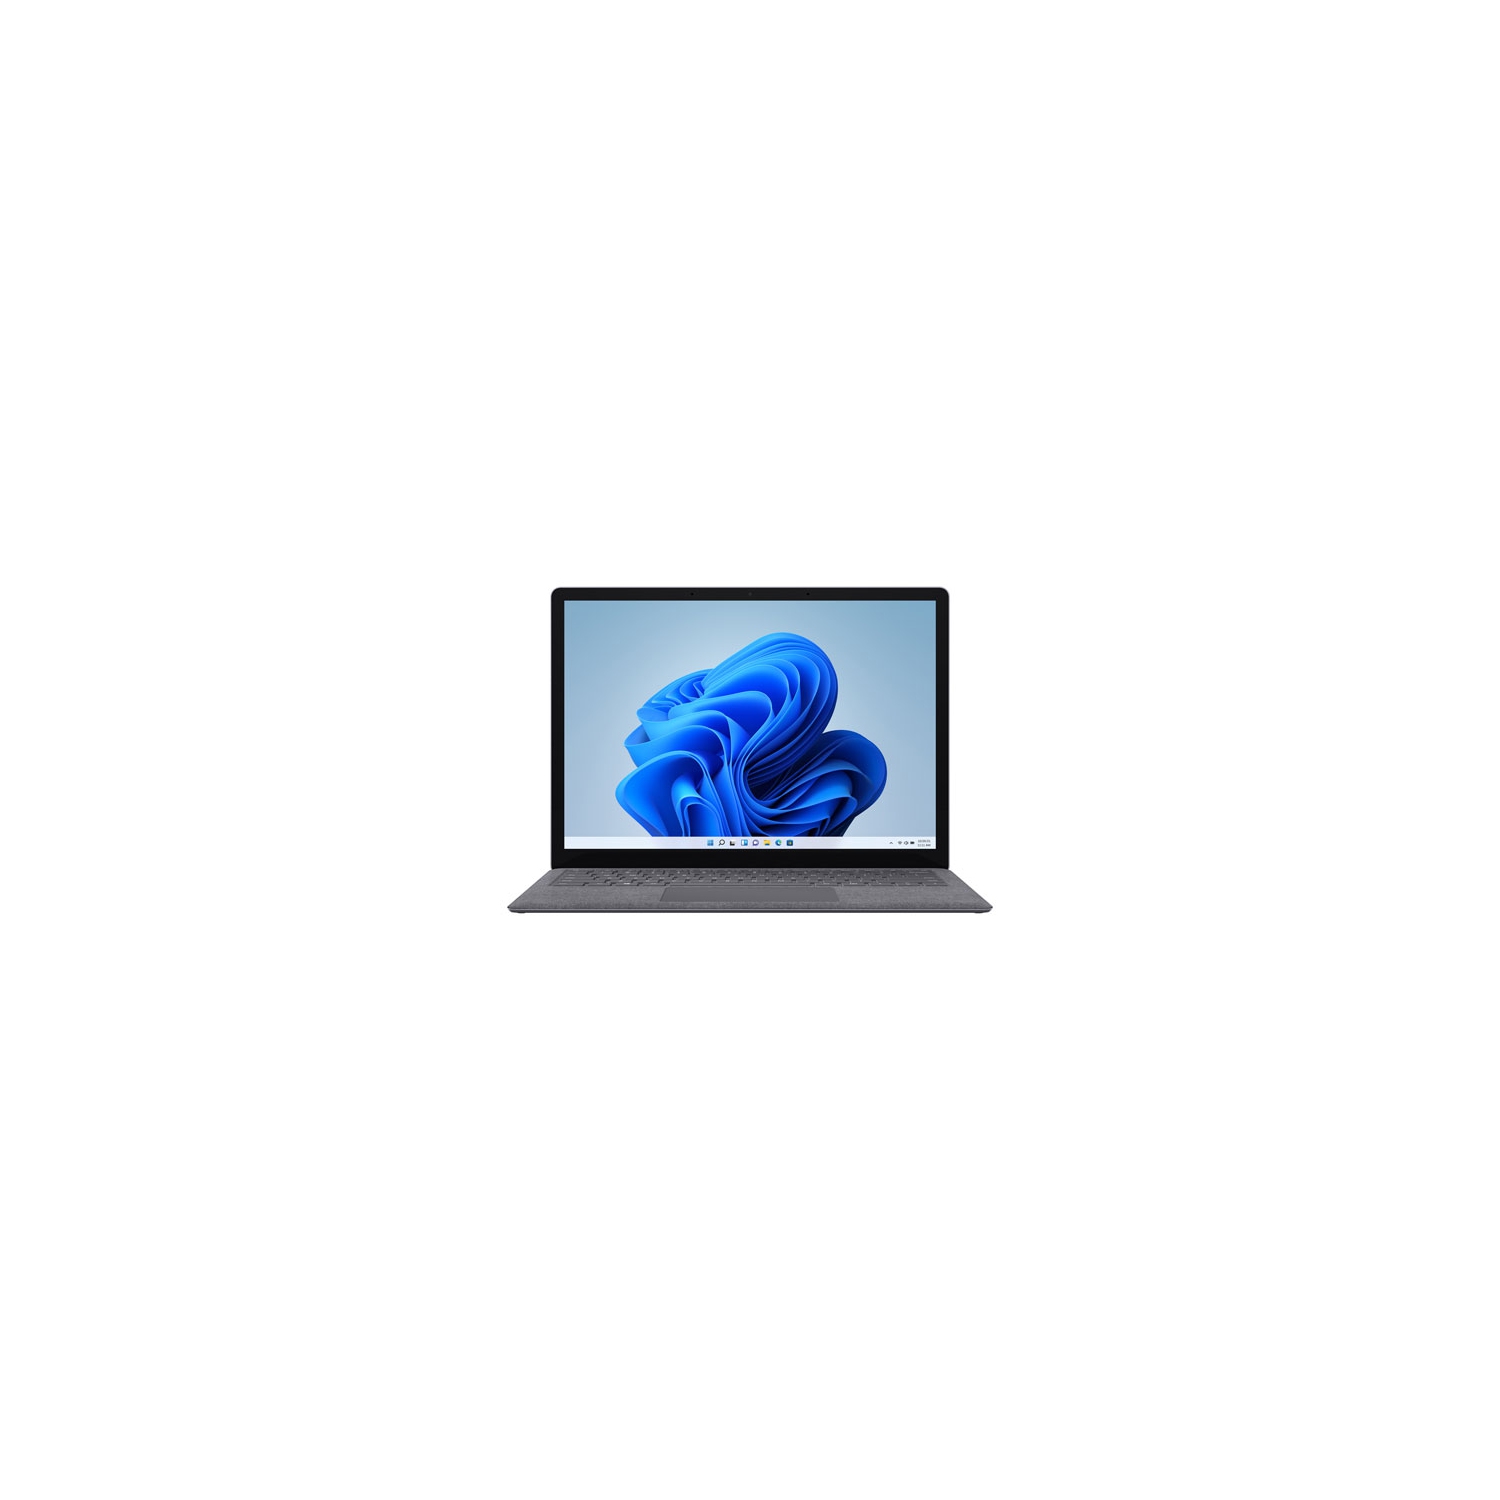 Refurbished (Excellent) - Microsoft Surface Laptop 4 Touchscreen 13.5" - Platinum (AMD Ryzen 5 4680U/256GB SSD/8GB RAM) - Eng